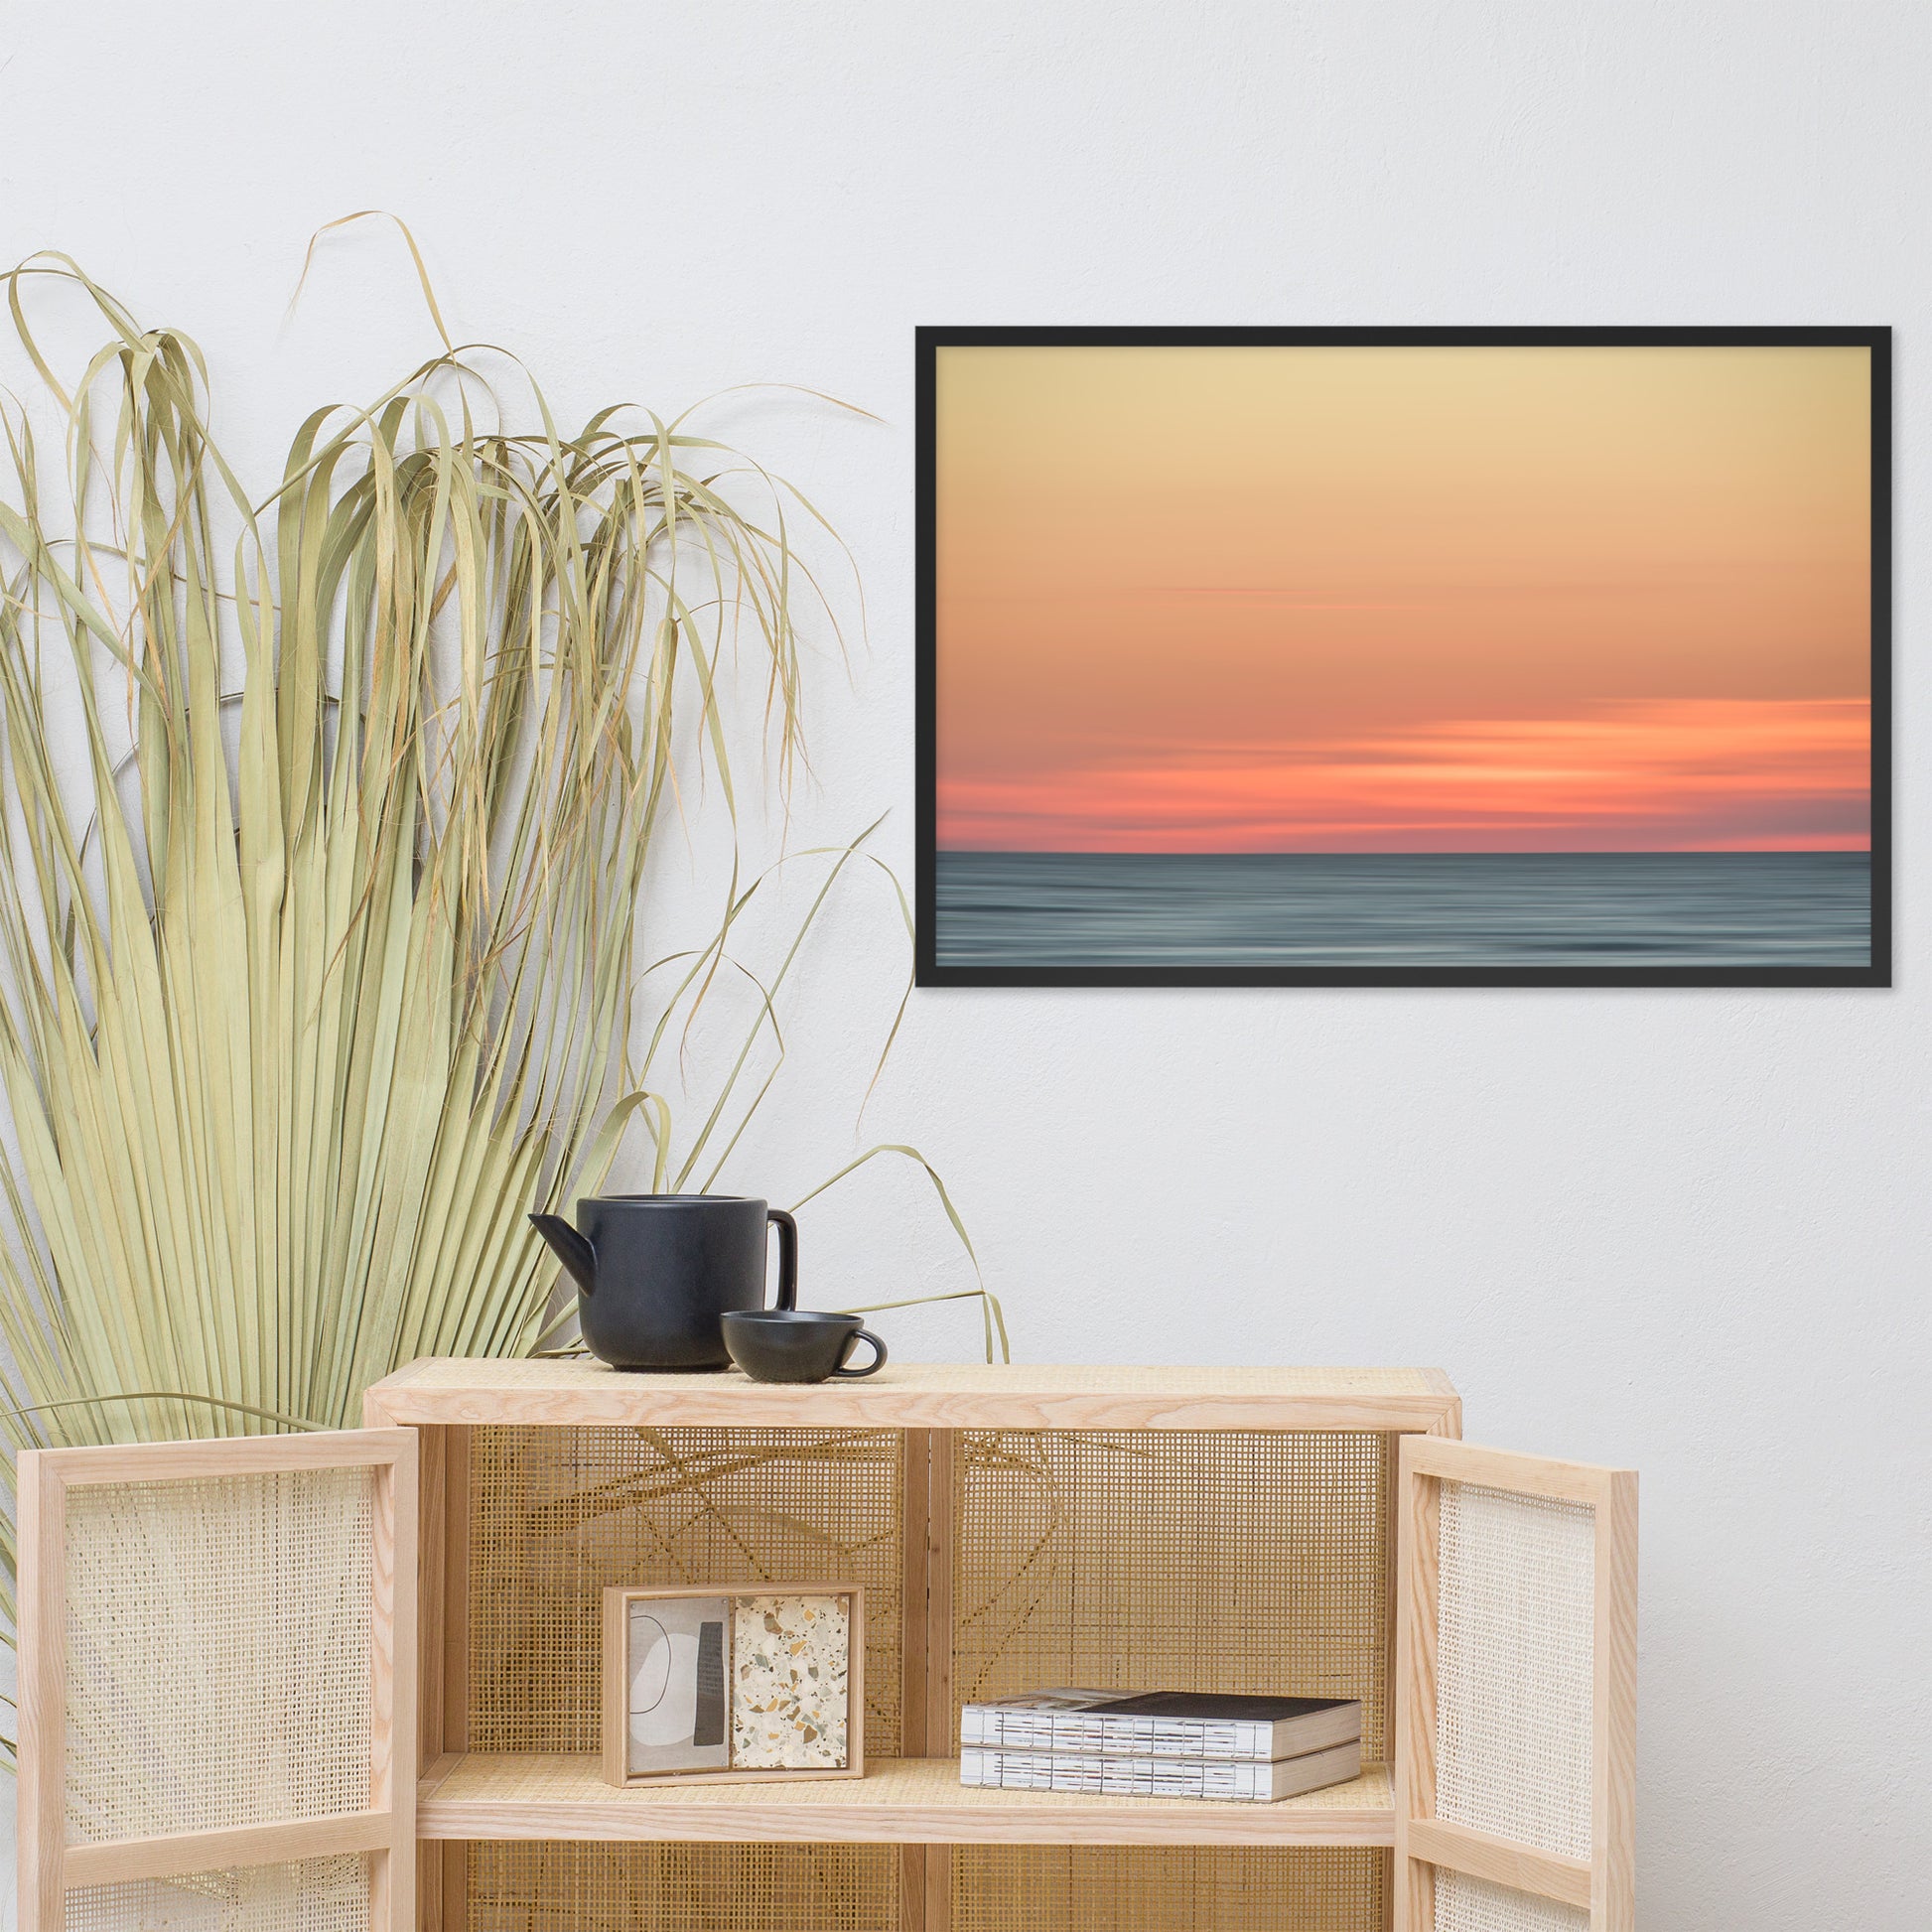 decorate living room wall hangings, Pink Coastal Wall Art: Abstract Color Blend Ocean Sunset - Coastal / Beach / Seascape / Nature / Landscape Photo Framed Wall Art Print - Artwork - Wall Decor